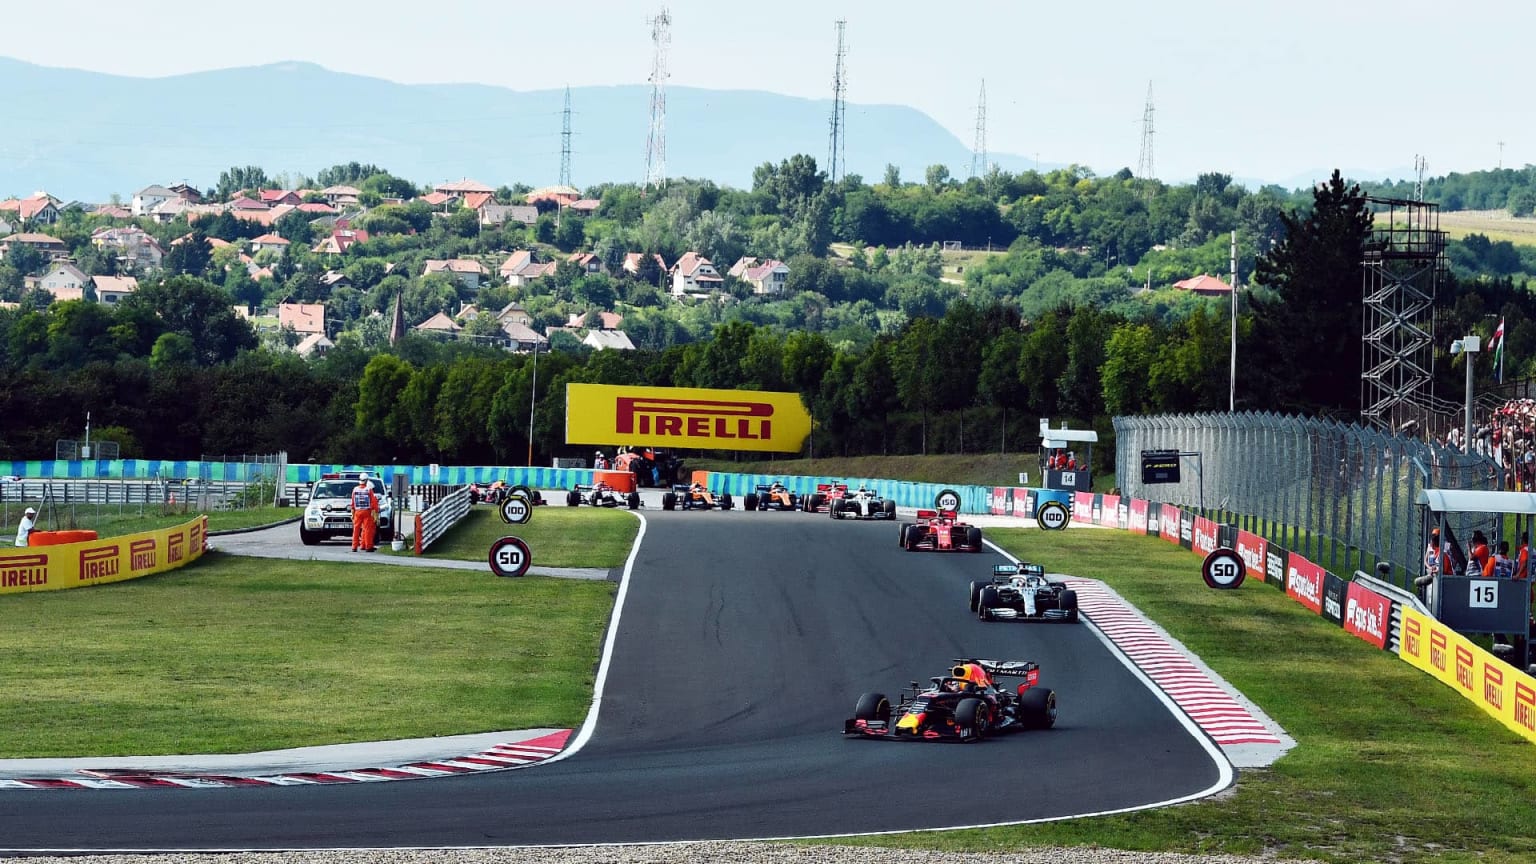 Hungarian Grand Prix 2021 F1 Race